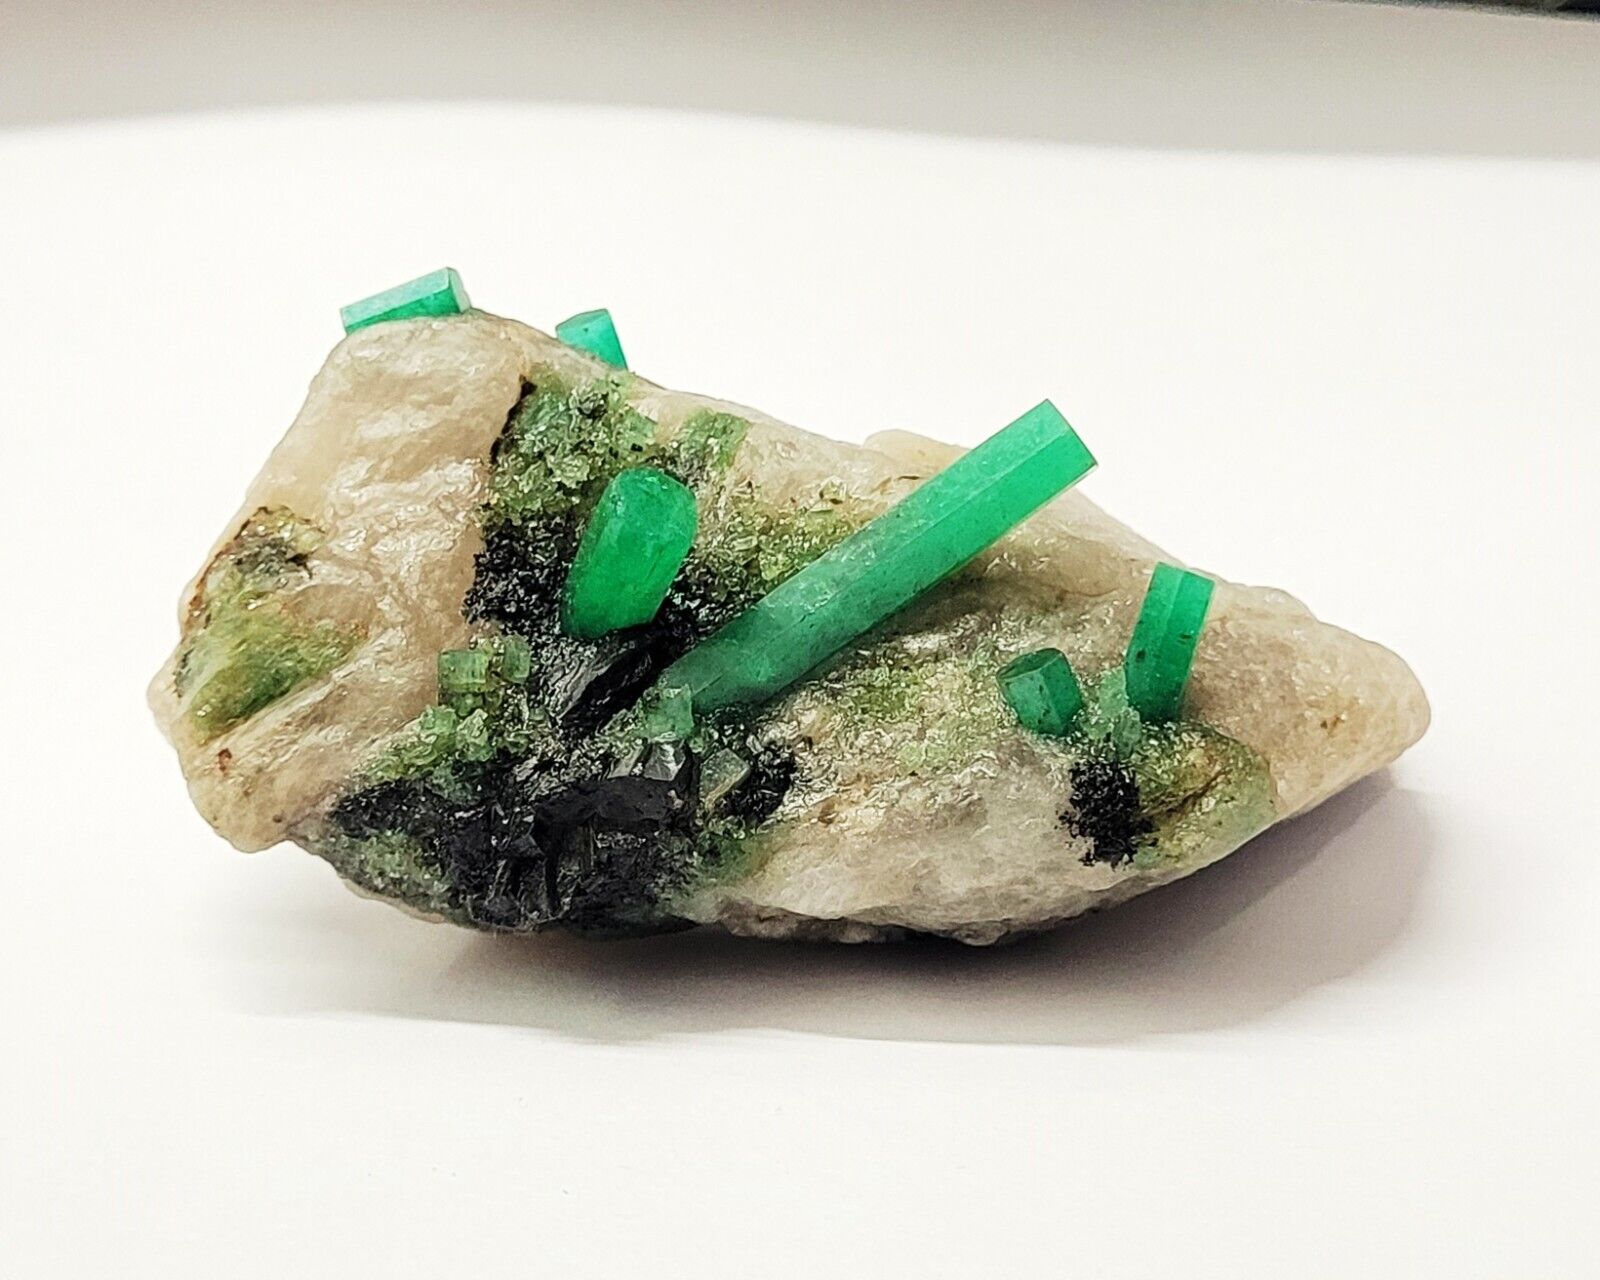 572 Ct Natural Zambia Emerald Matrix Rough Emerald Specimen Crystal Gemstones